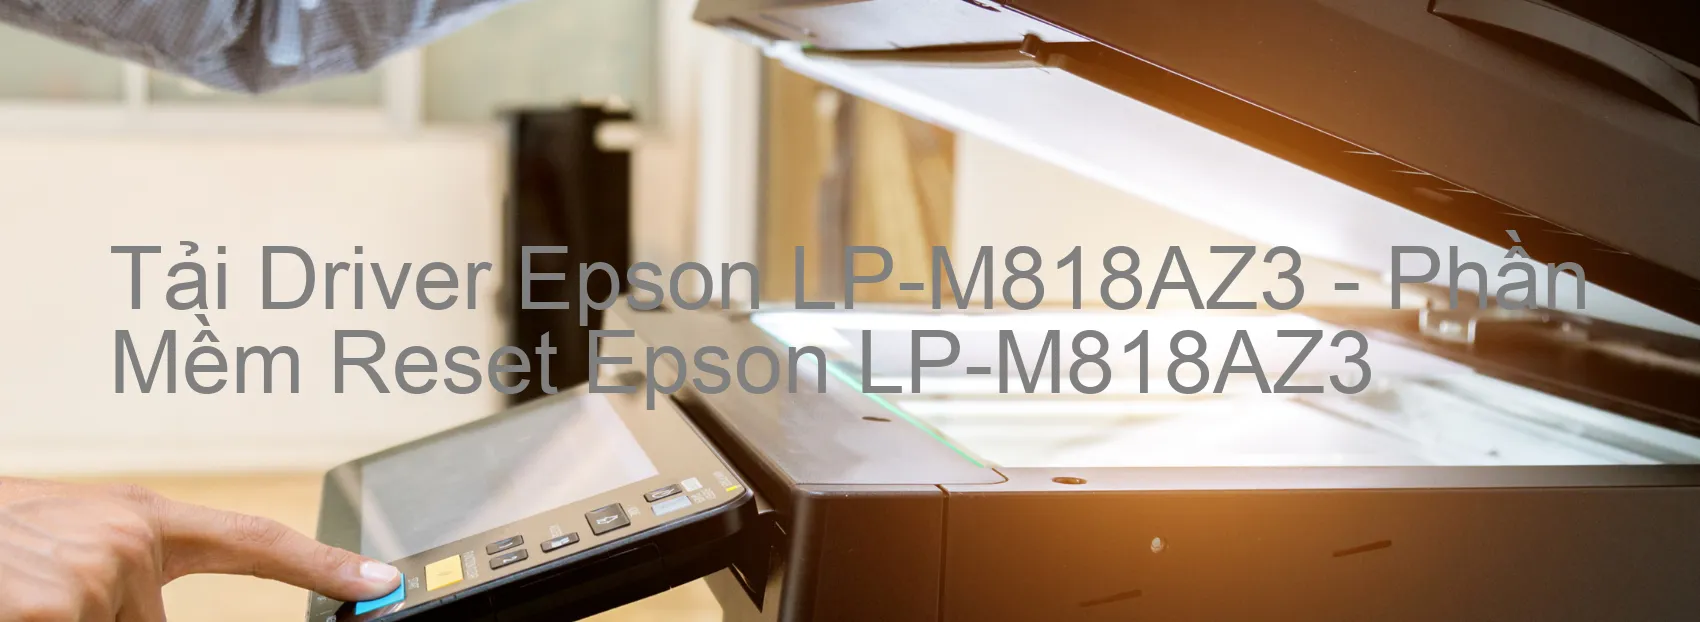 Driver Epson LP-M818AZ3, Phần Mềm Reset Epson LP-M818AZ3